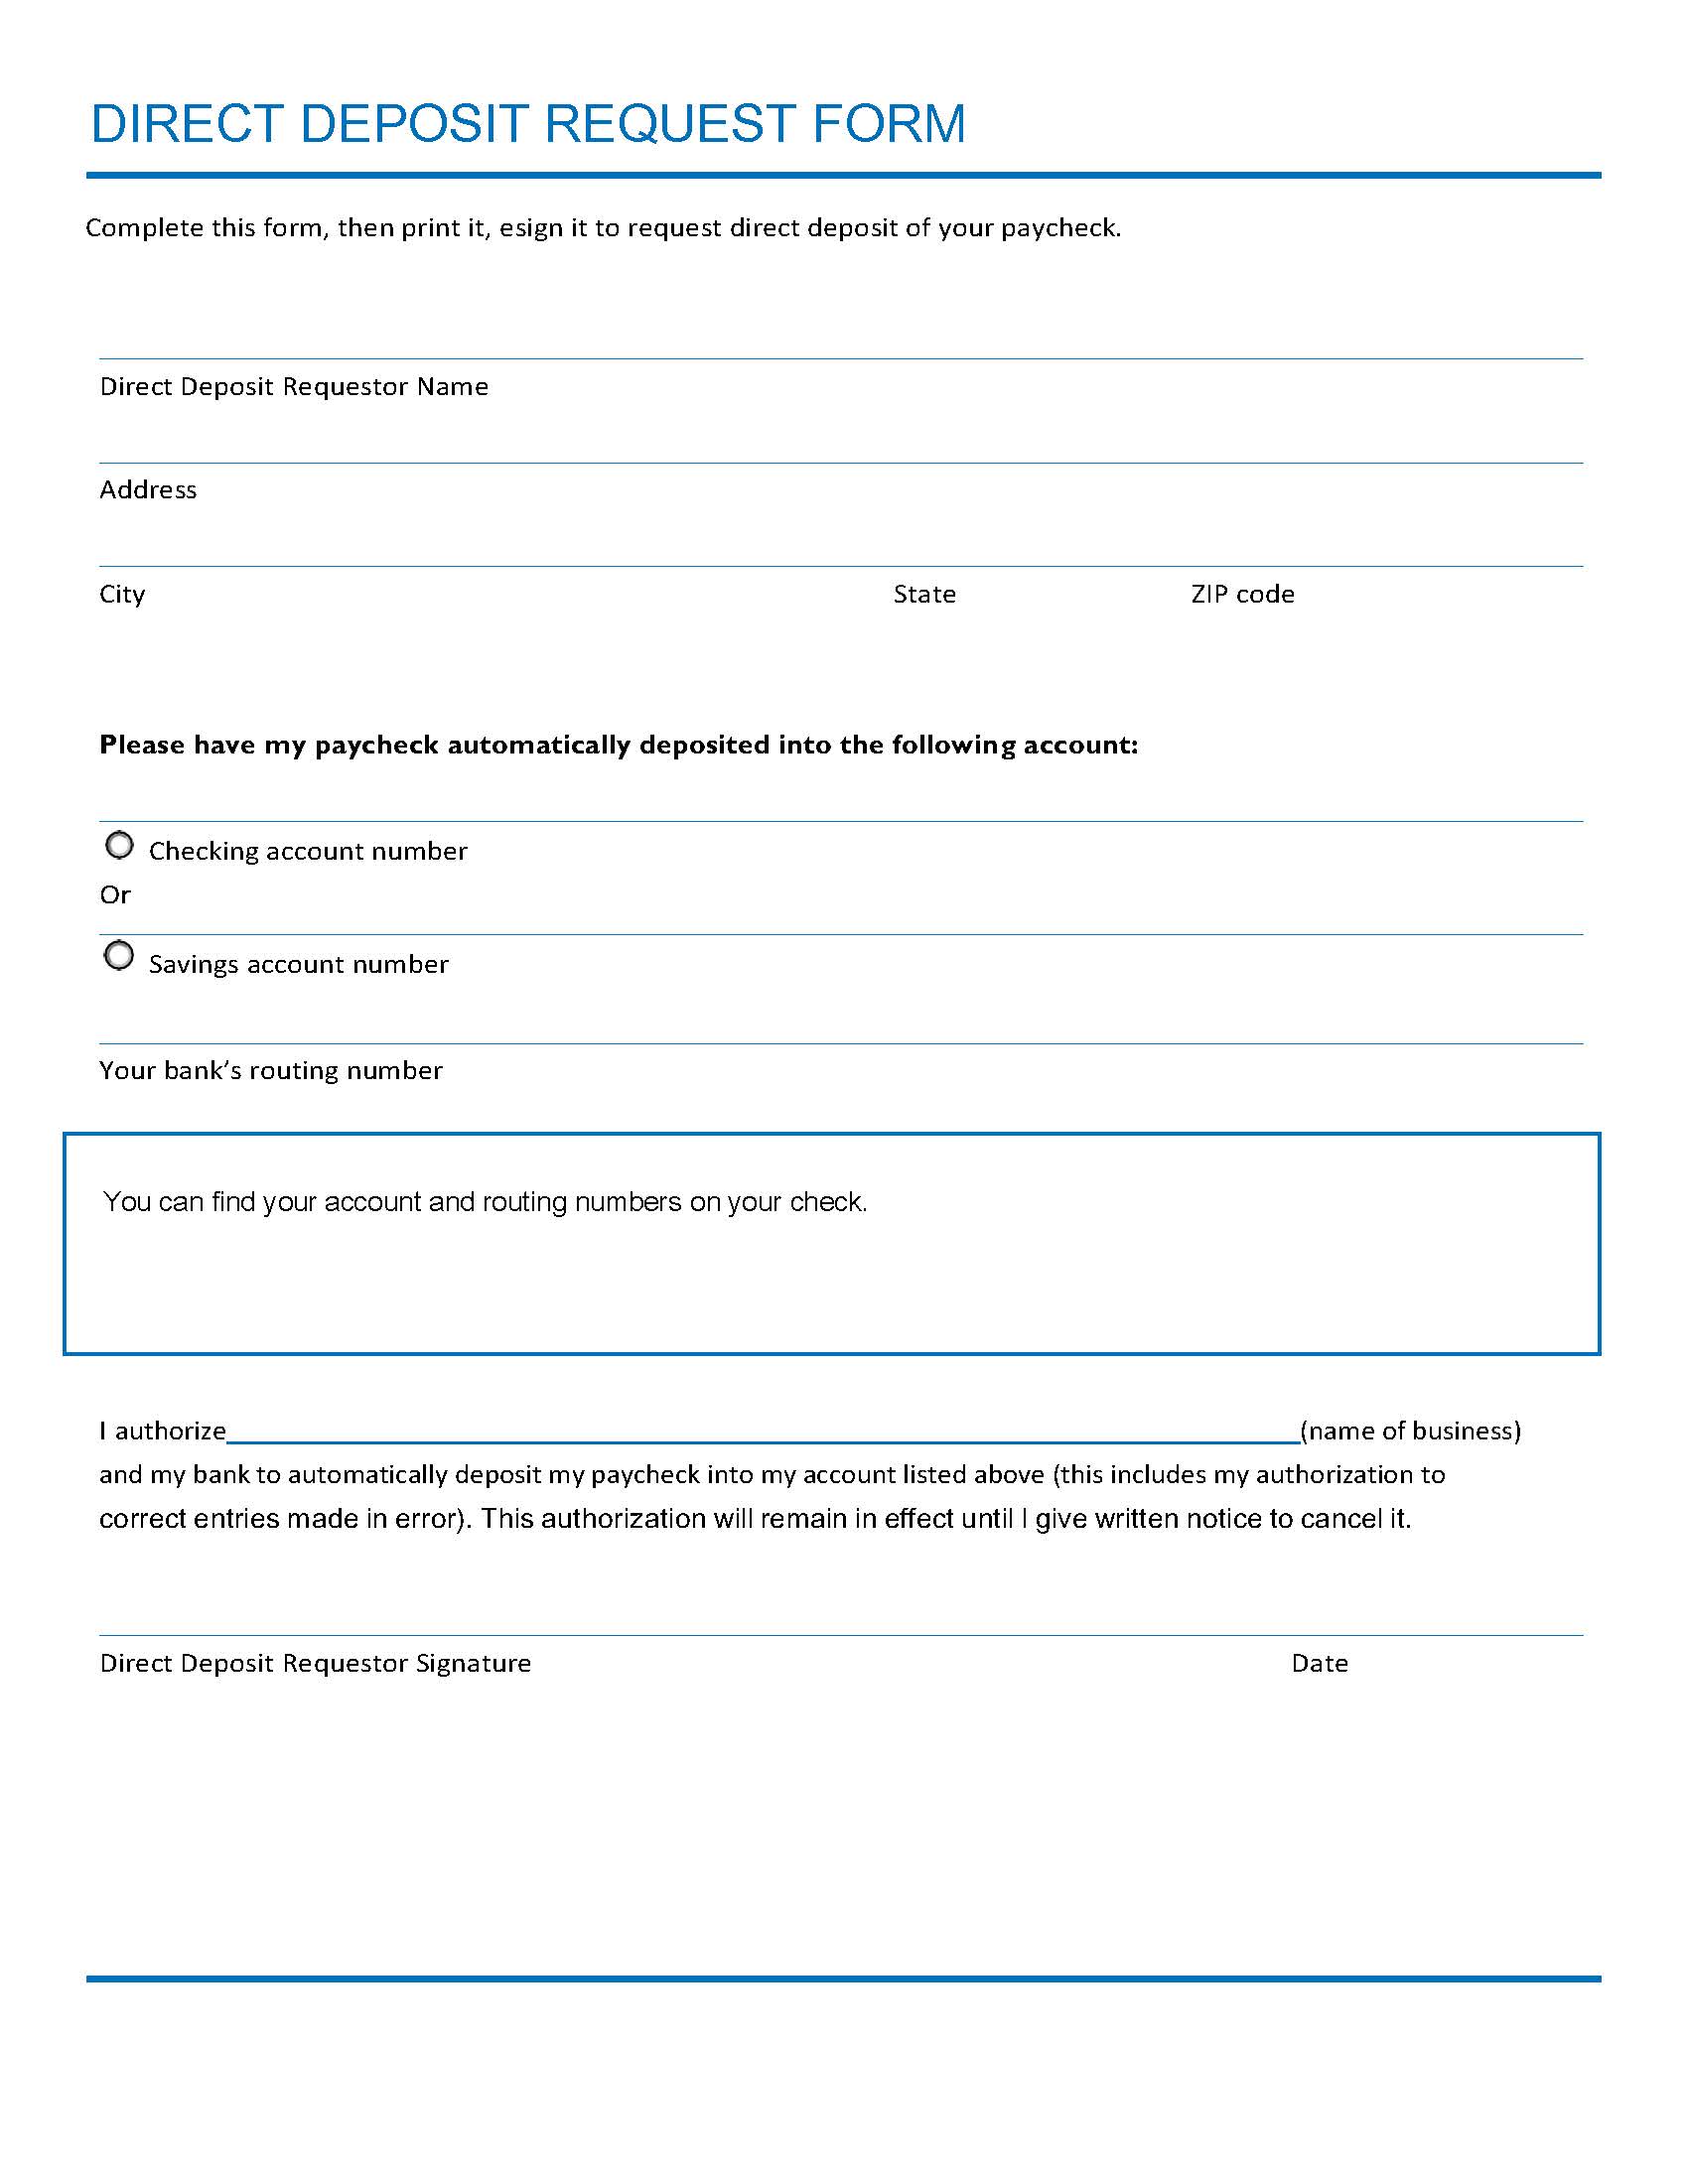 Direct Deposit Authorization Form Template